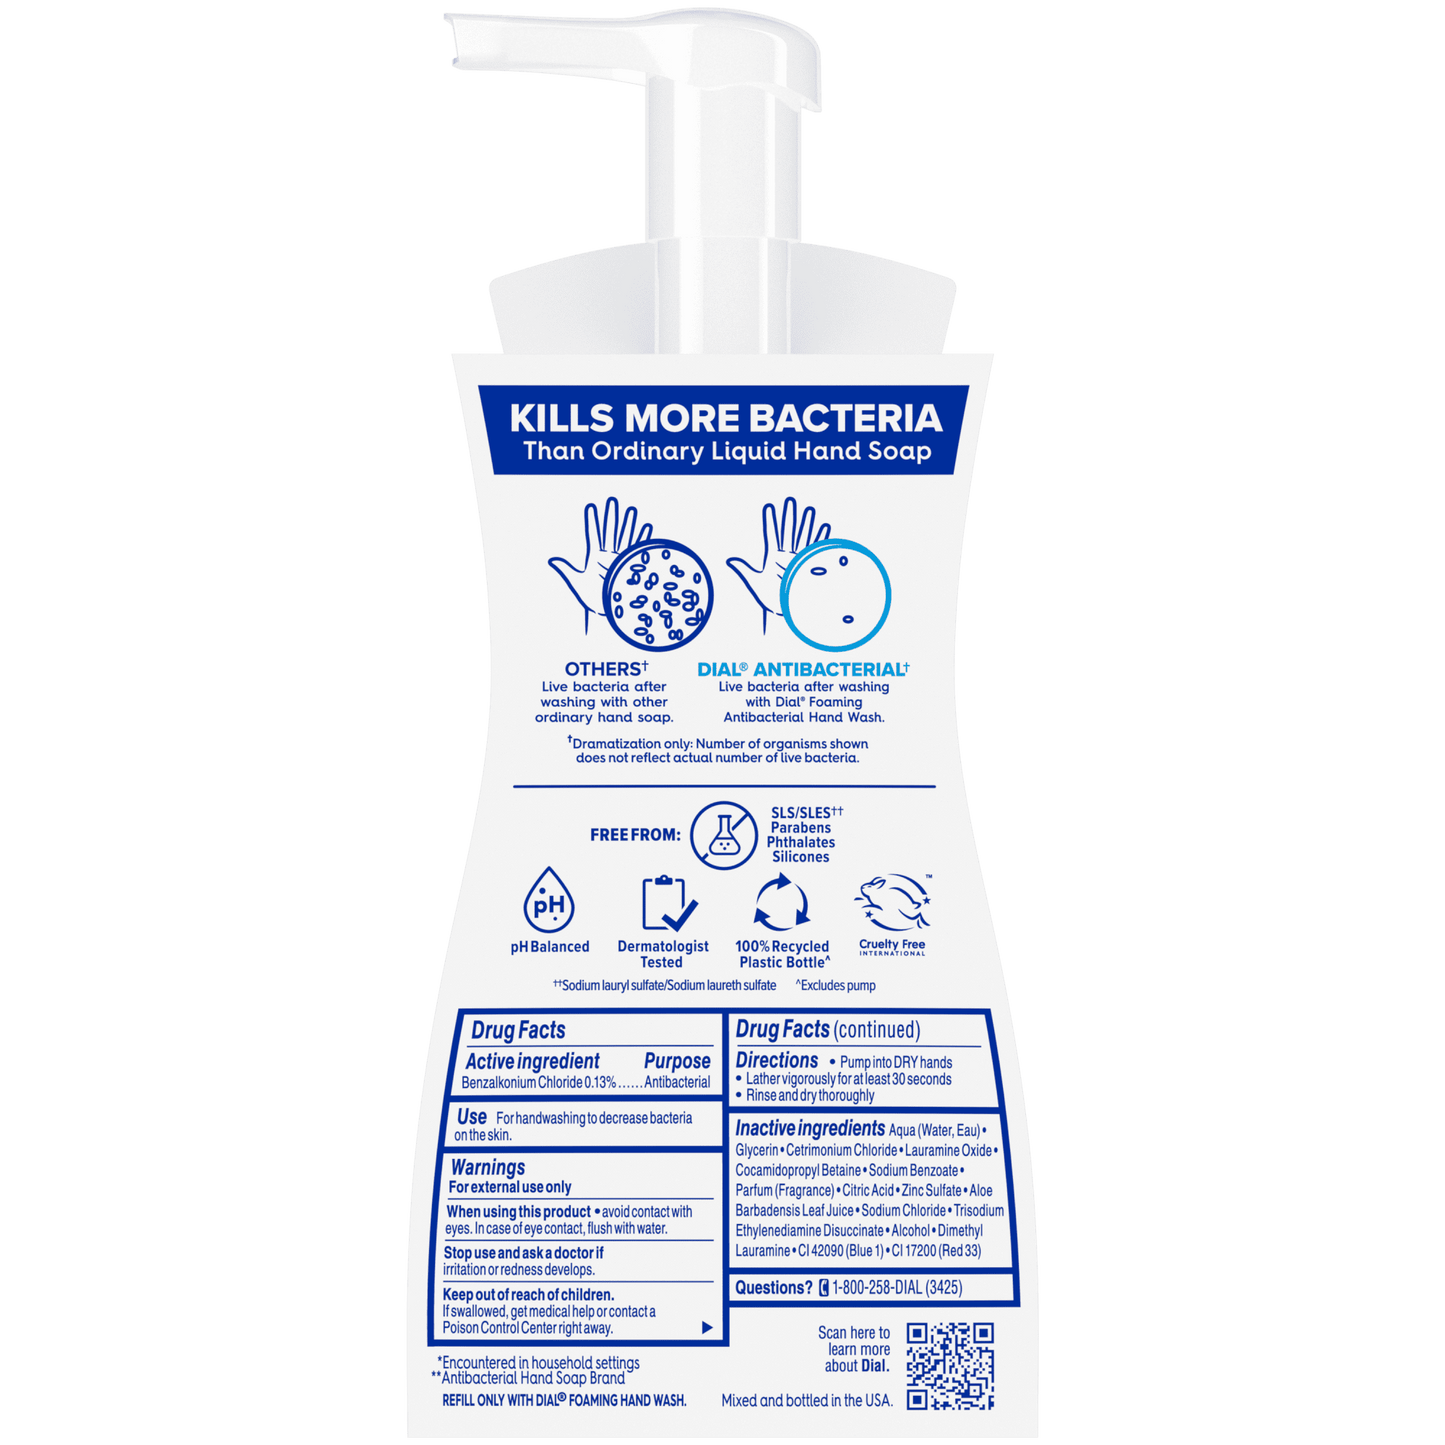 Dial Antibacterial Foaming Hand Wash, Coconut Water, 7.5 fl oz